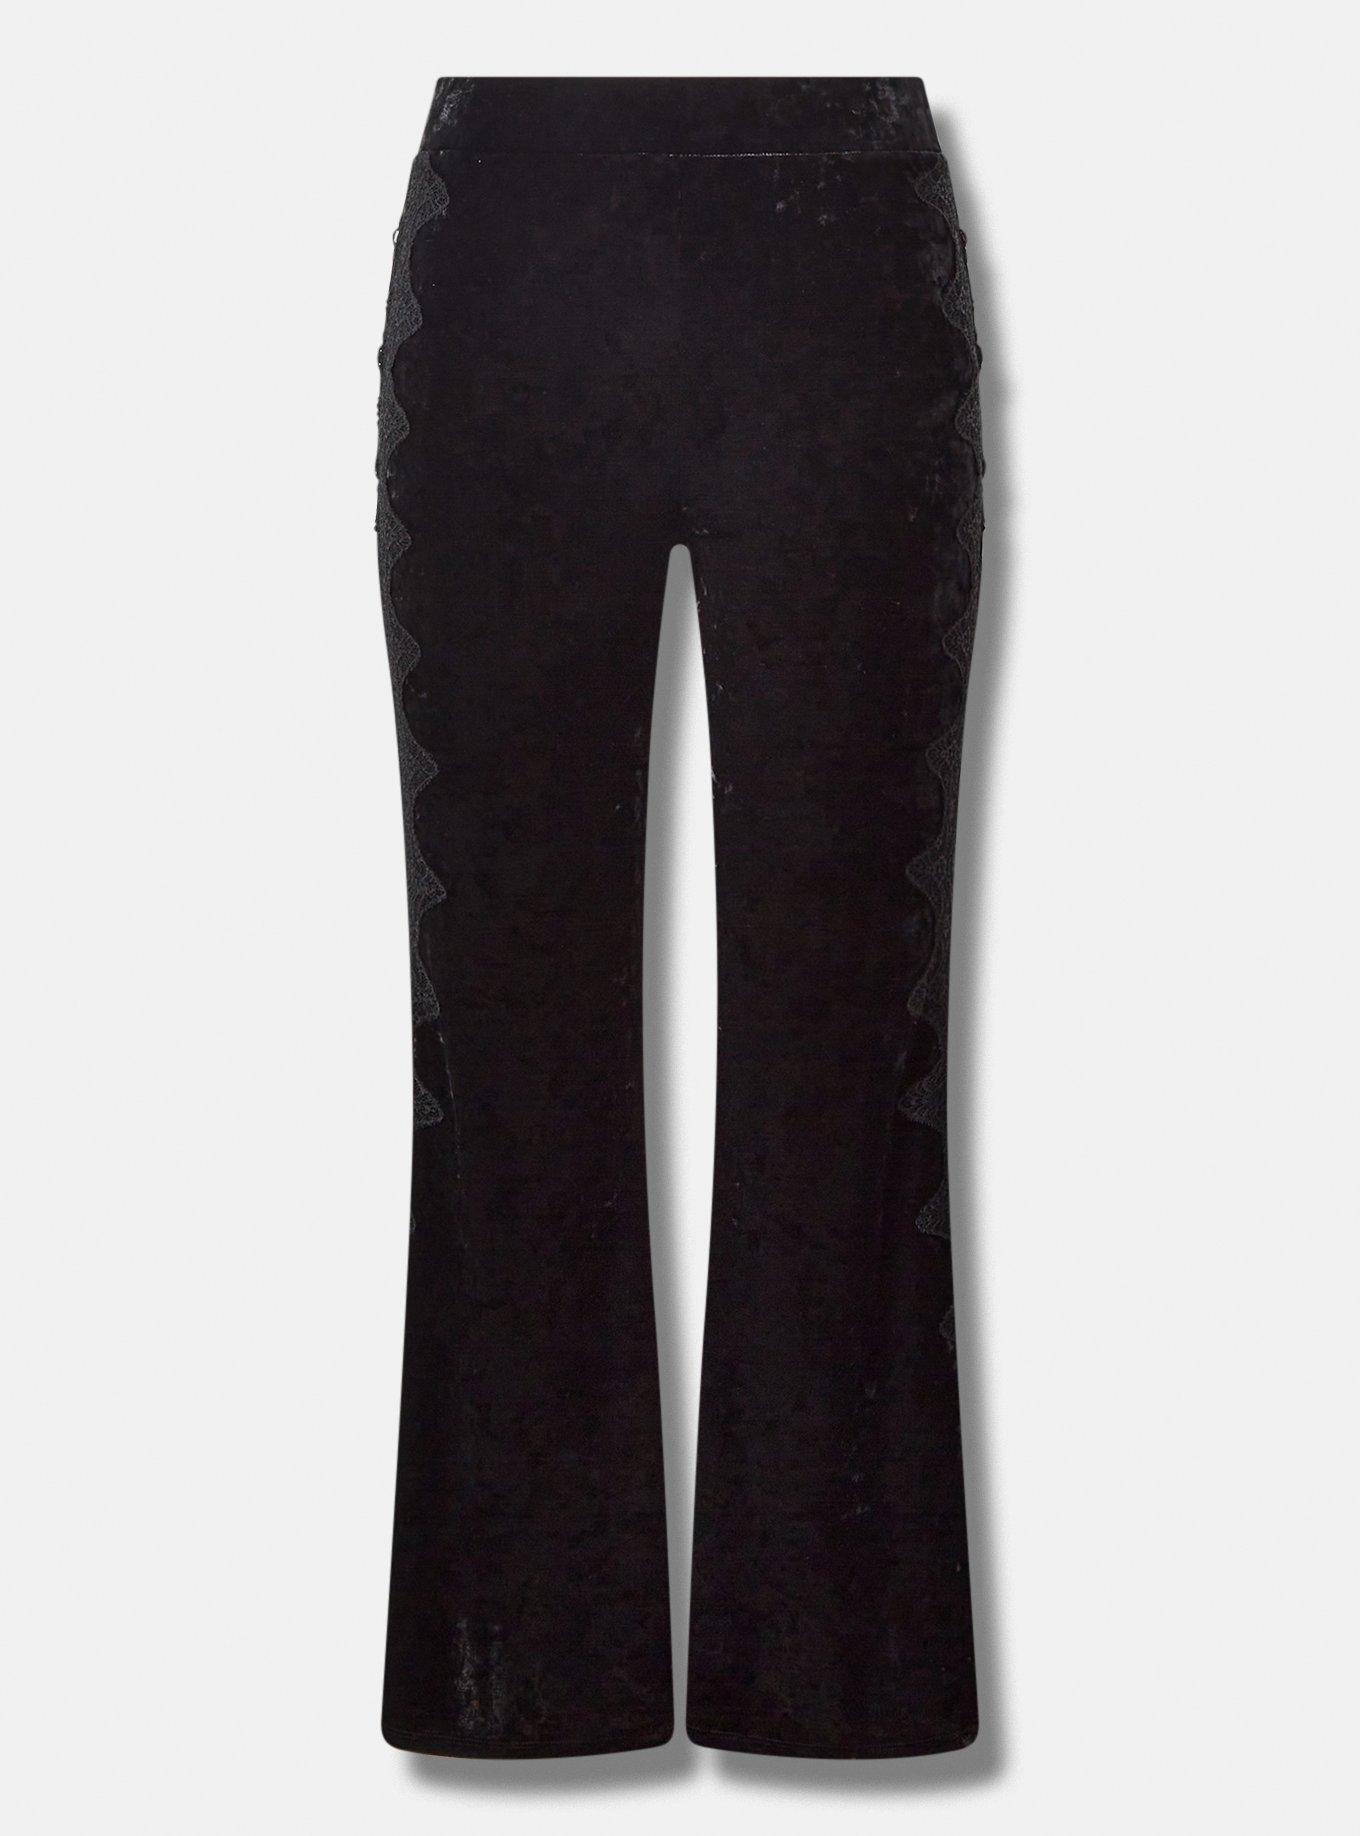 Buy Lace flared trousers online in KSA